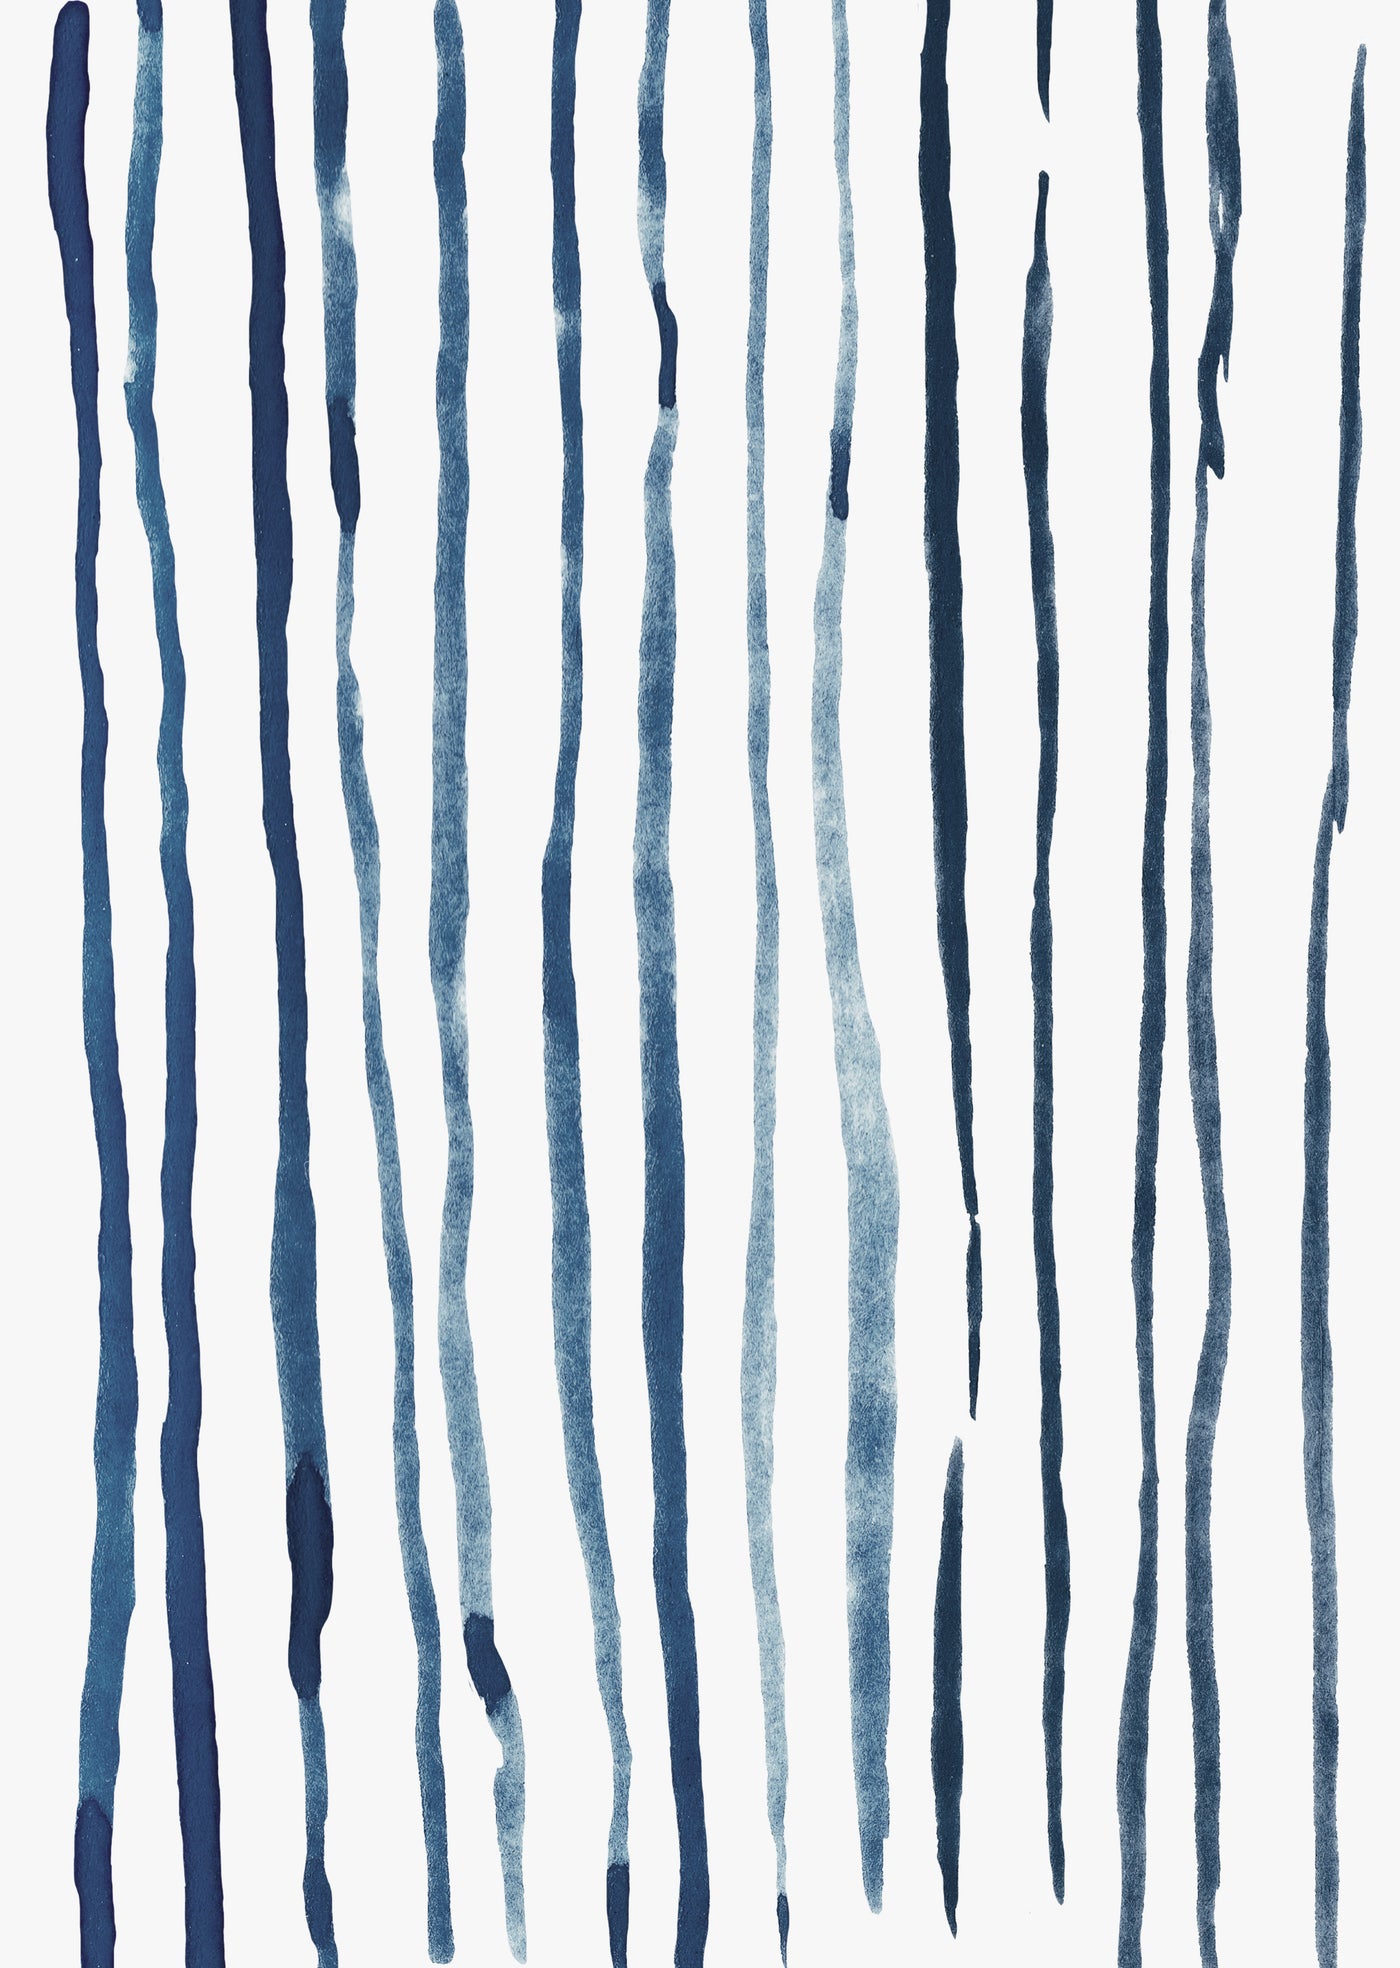 Blue Stripes Abstract Wall Art Print